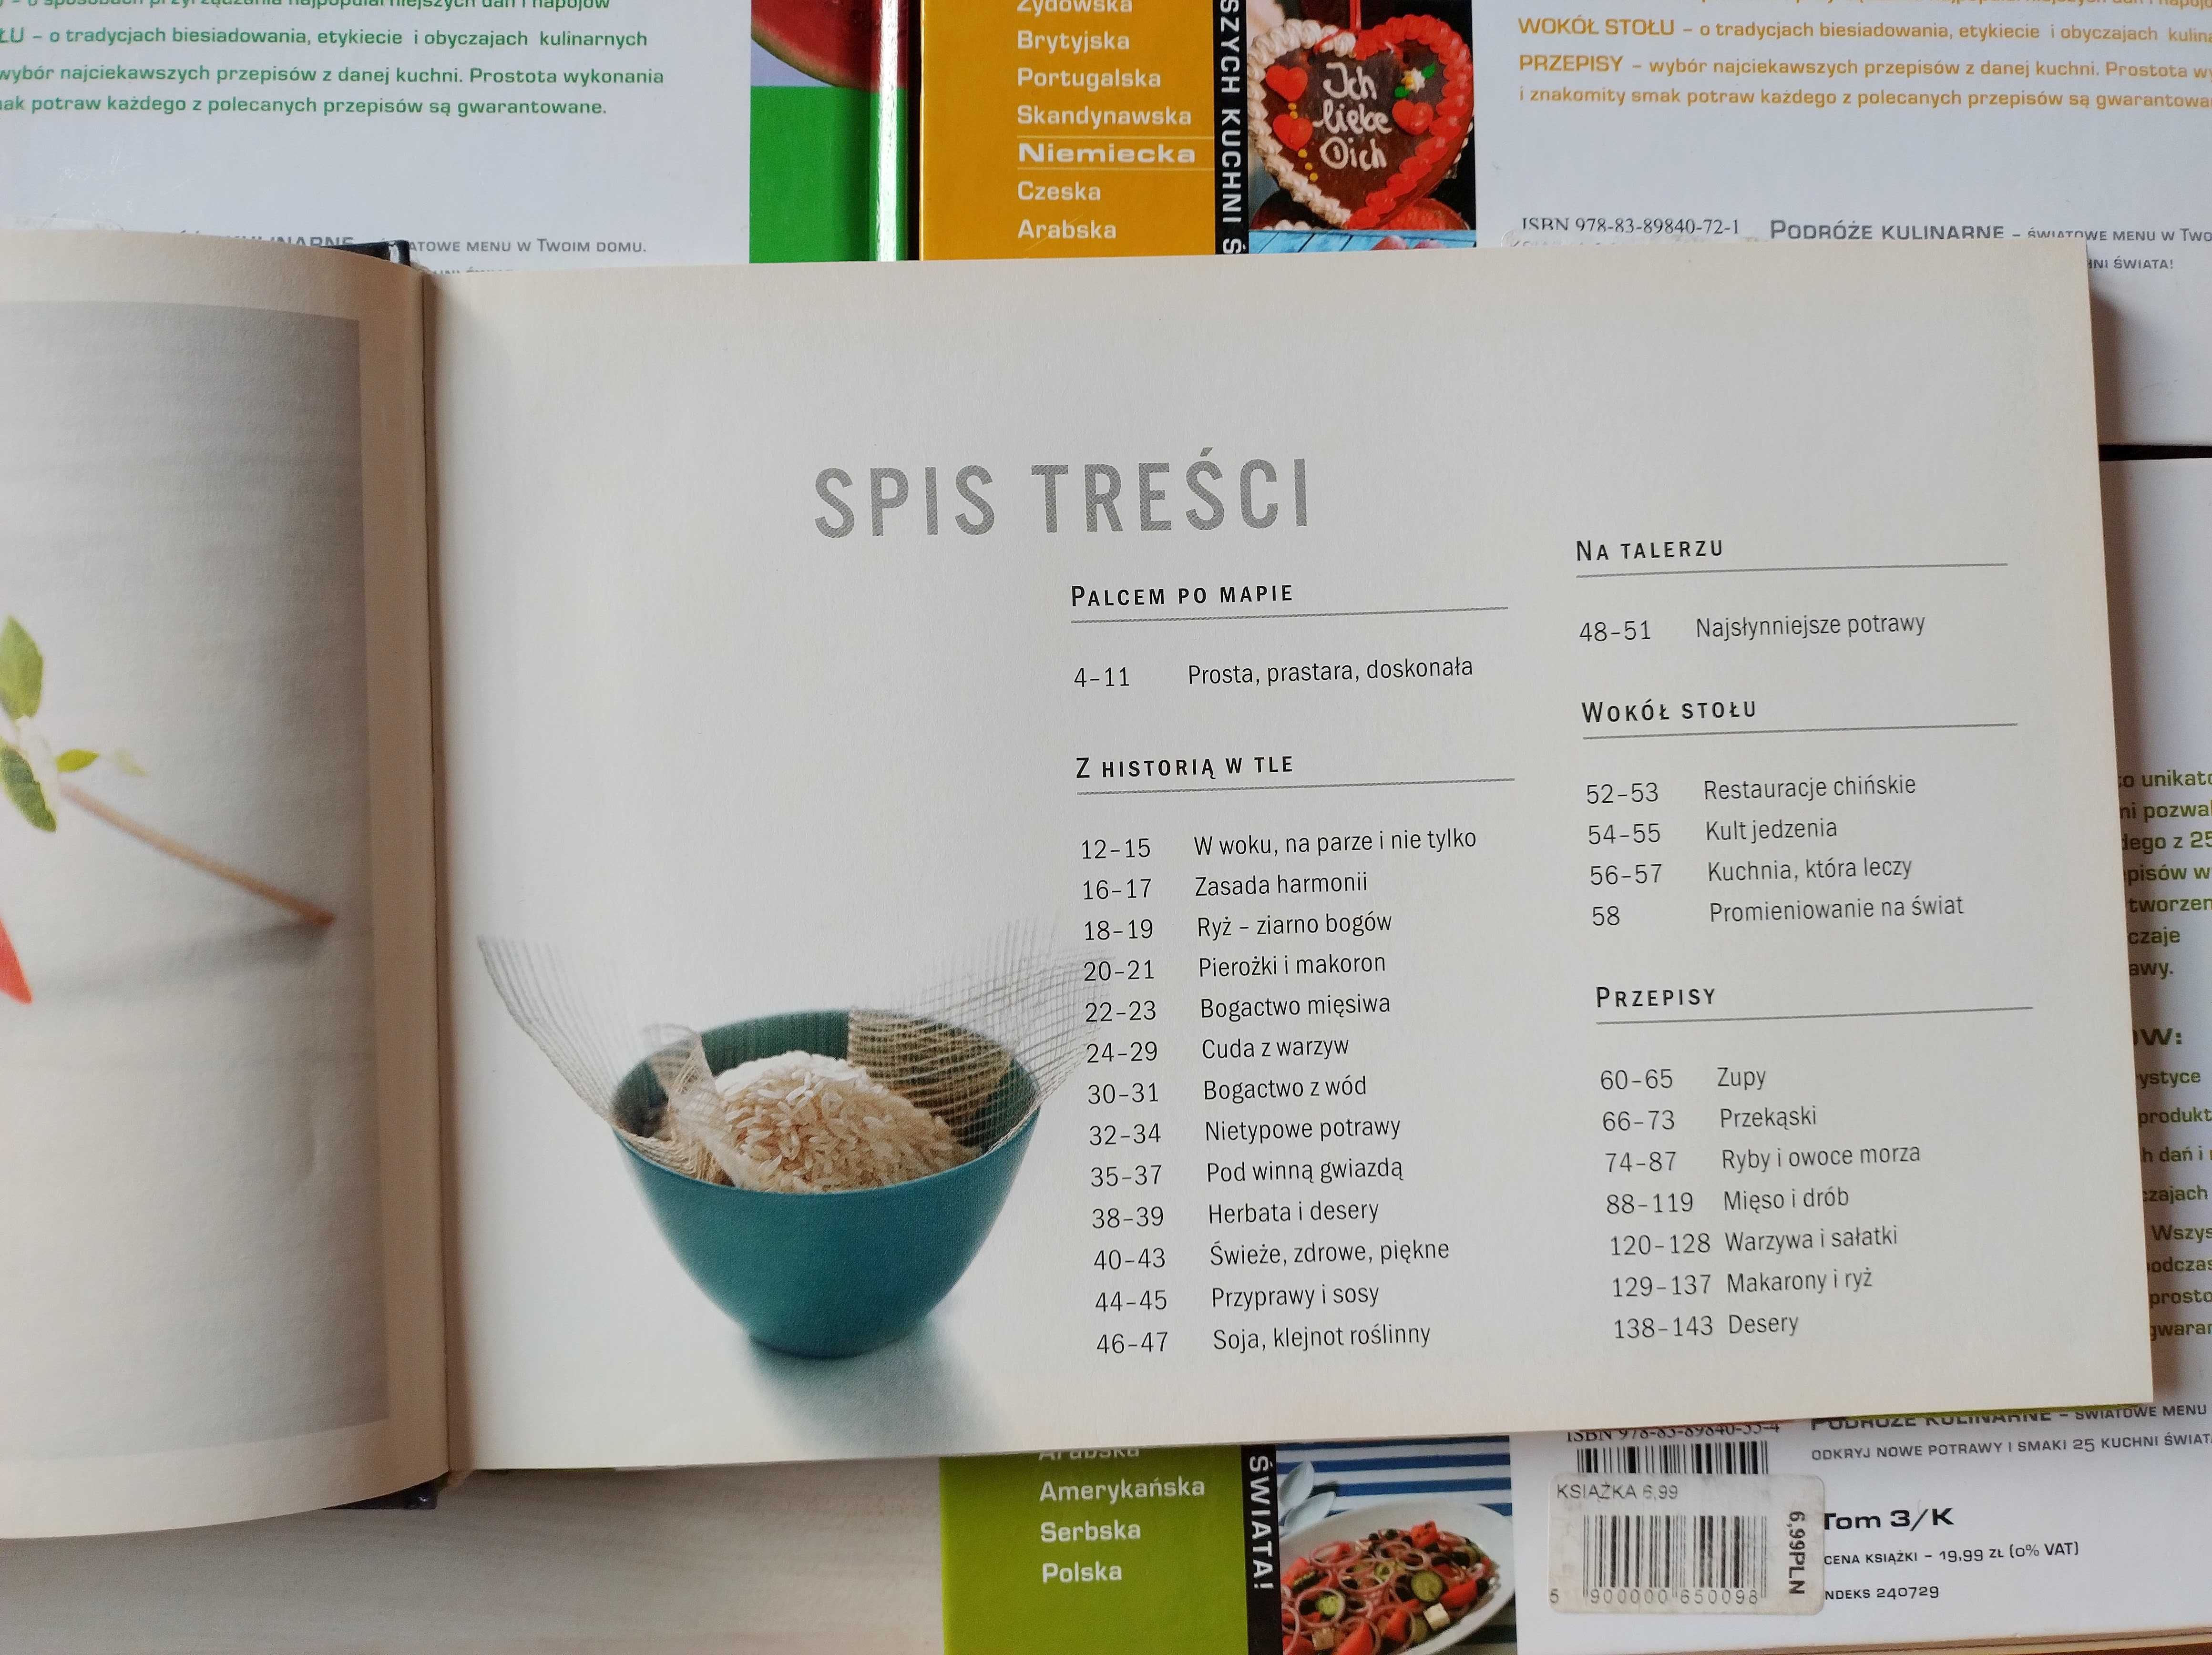 4 książki z serii Podróże kulinarne, kuchnia grecka, chińska, bułgarsk